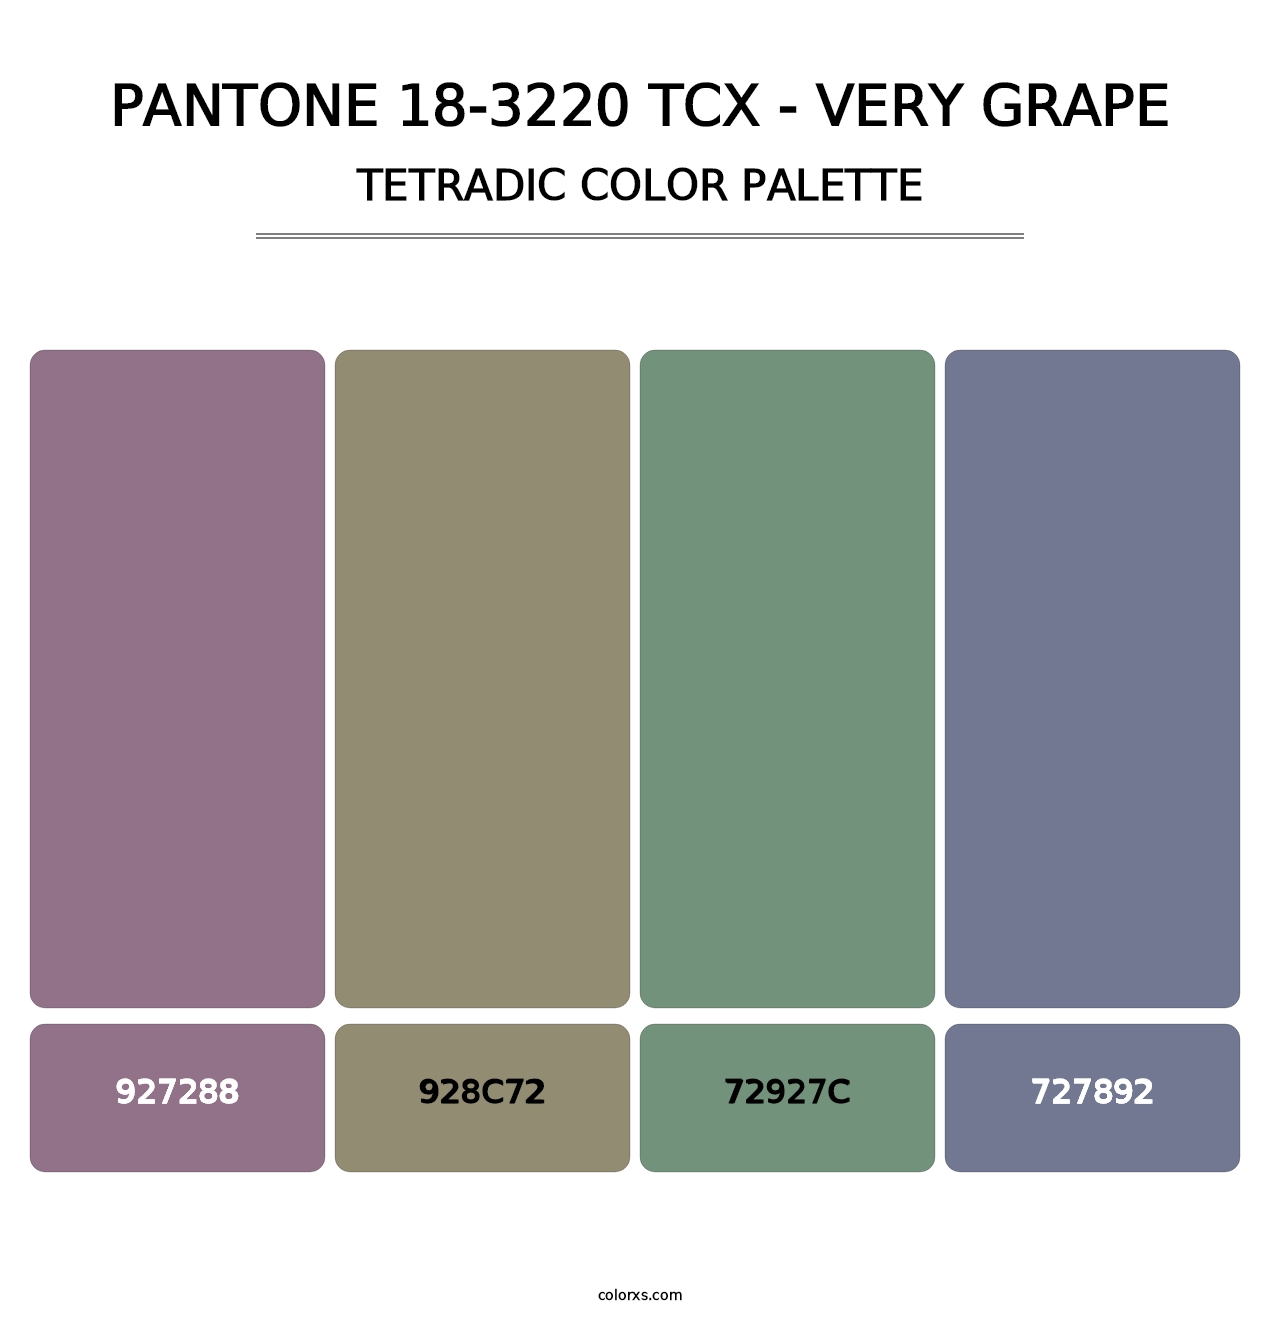 PANTONE 18-3220 TCX - Very Grape - Tetradic Color Palette